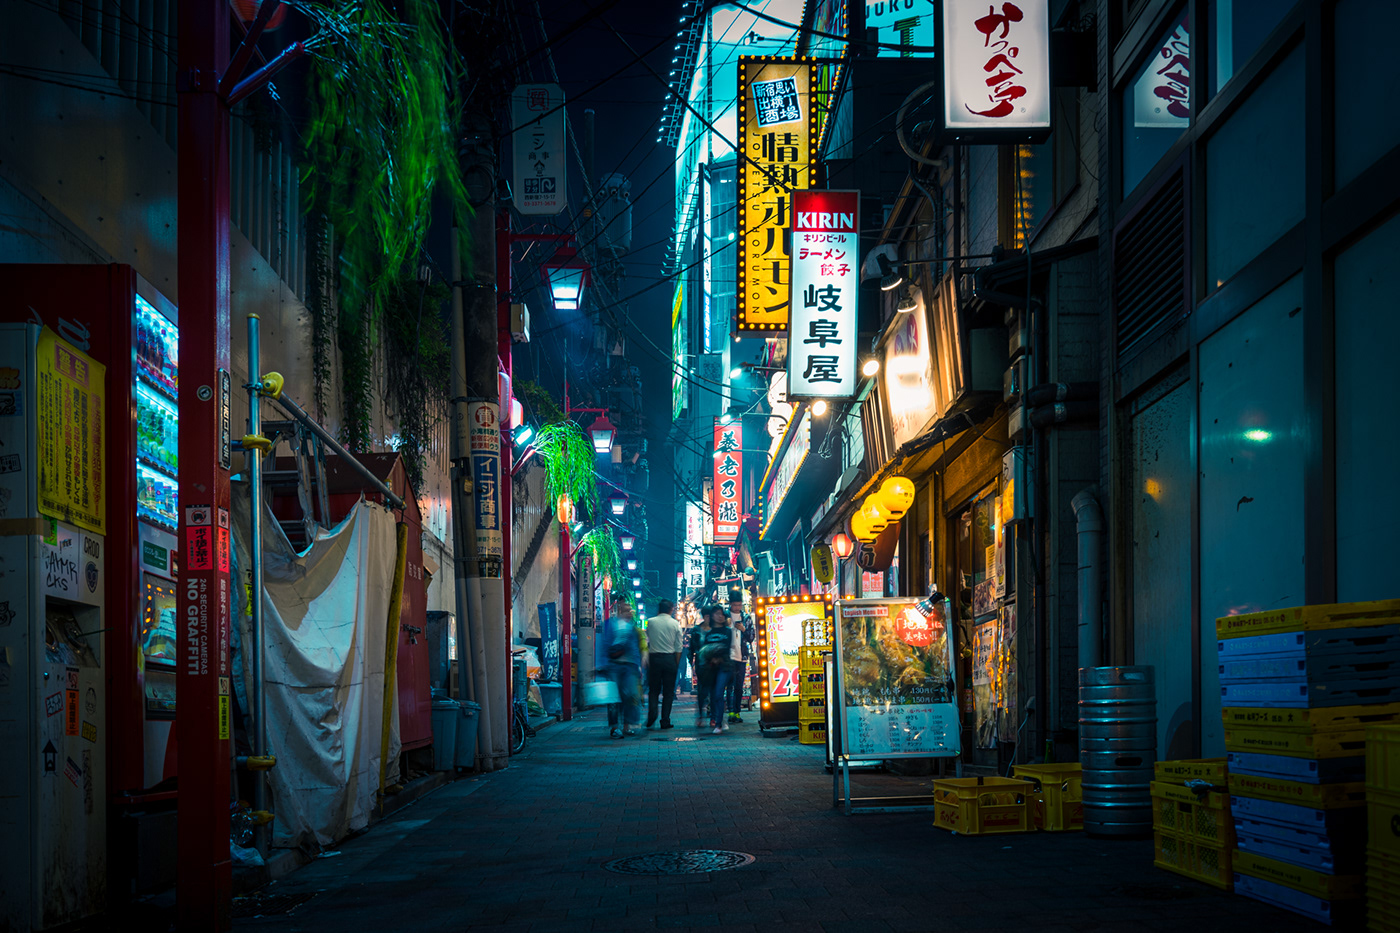 tokyo Shinjuku night life street photography Architecture Photography people Street urbanscape japan wanderlust